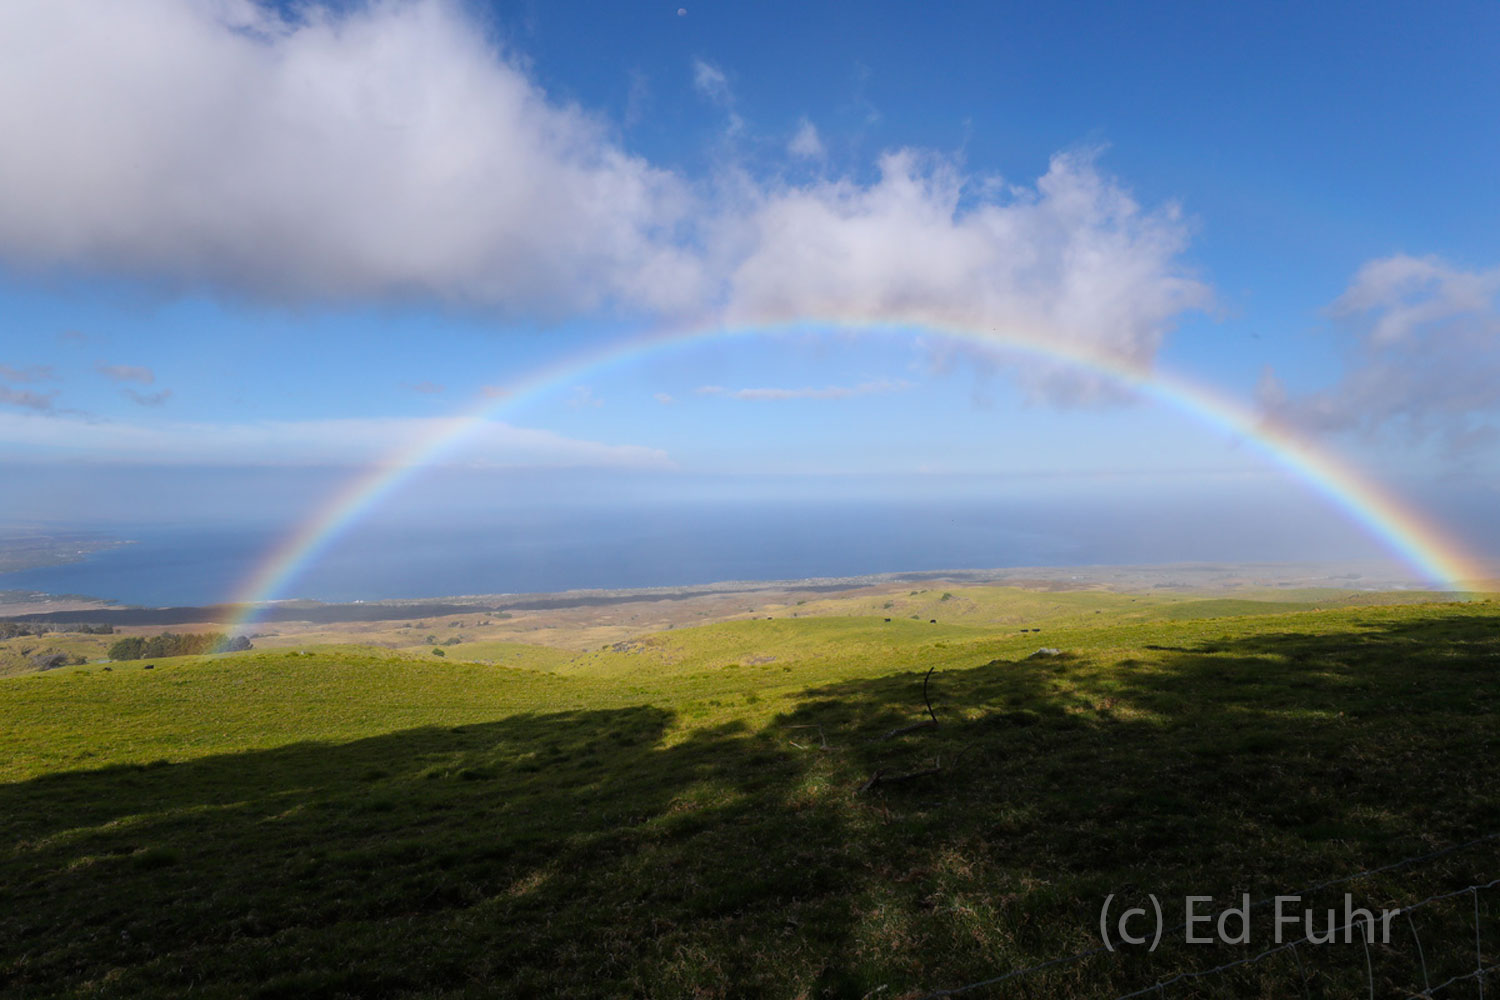 A classic Hawaiian symbol, the rainbow, stretches across the beautiful ranches of Kohala.